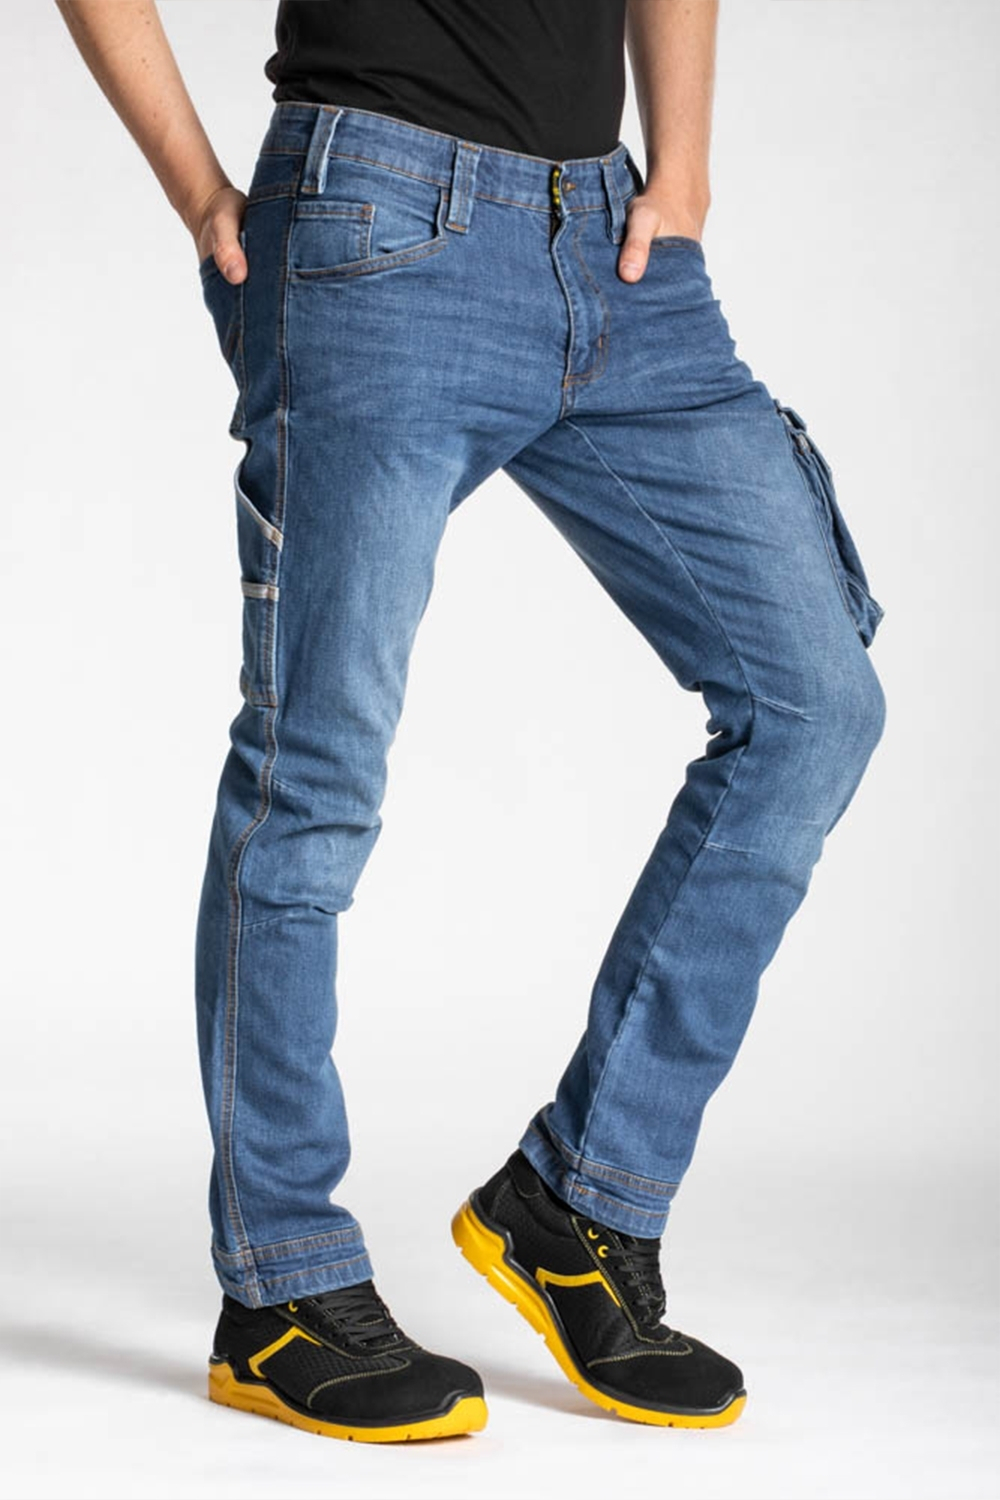 Rica Lewis Kalhoty do pasu RICA LEWIS JOB jeans vel.52